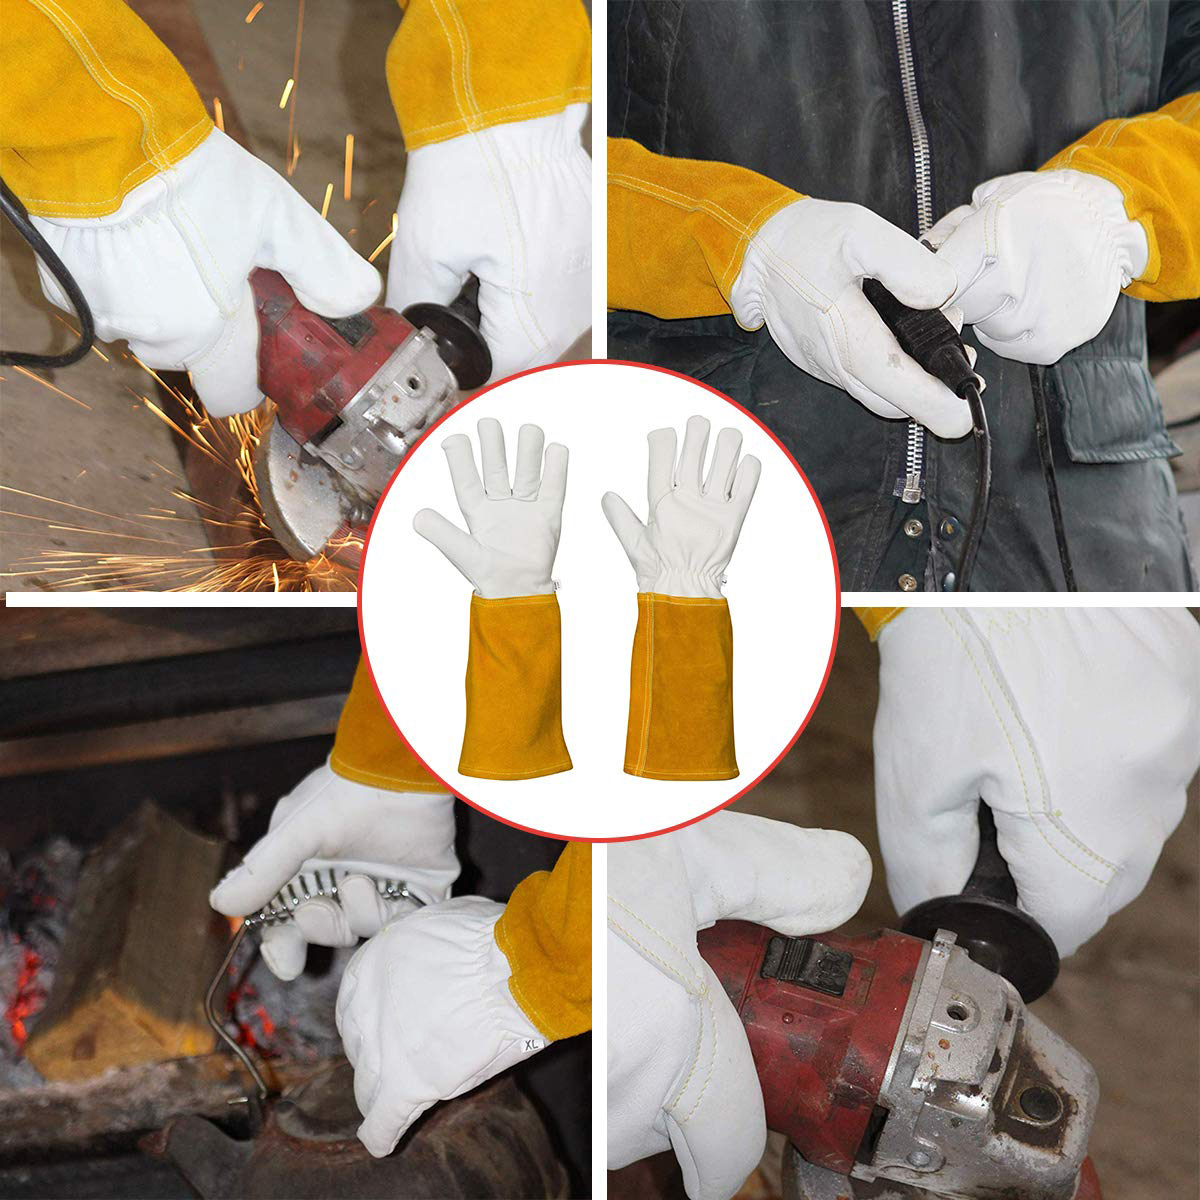 tig welding gloves